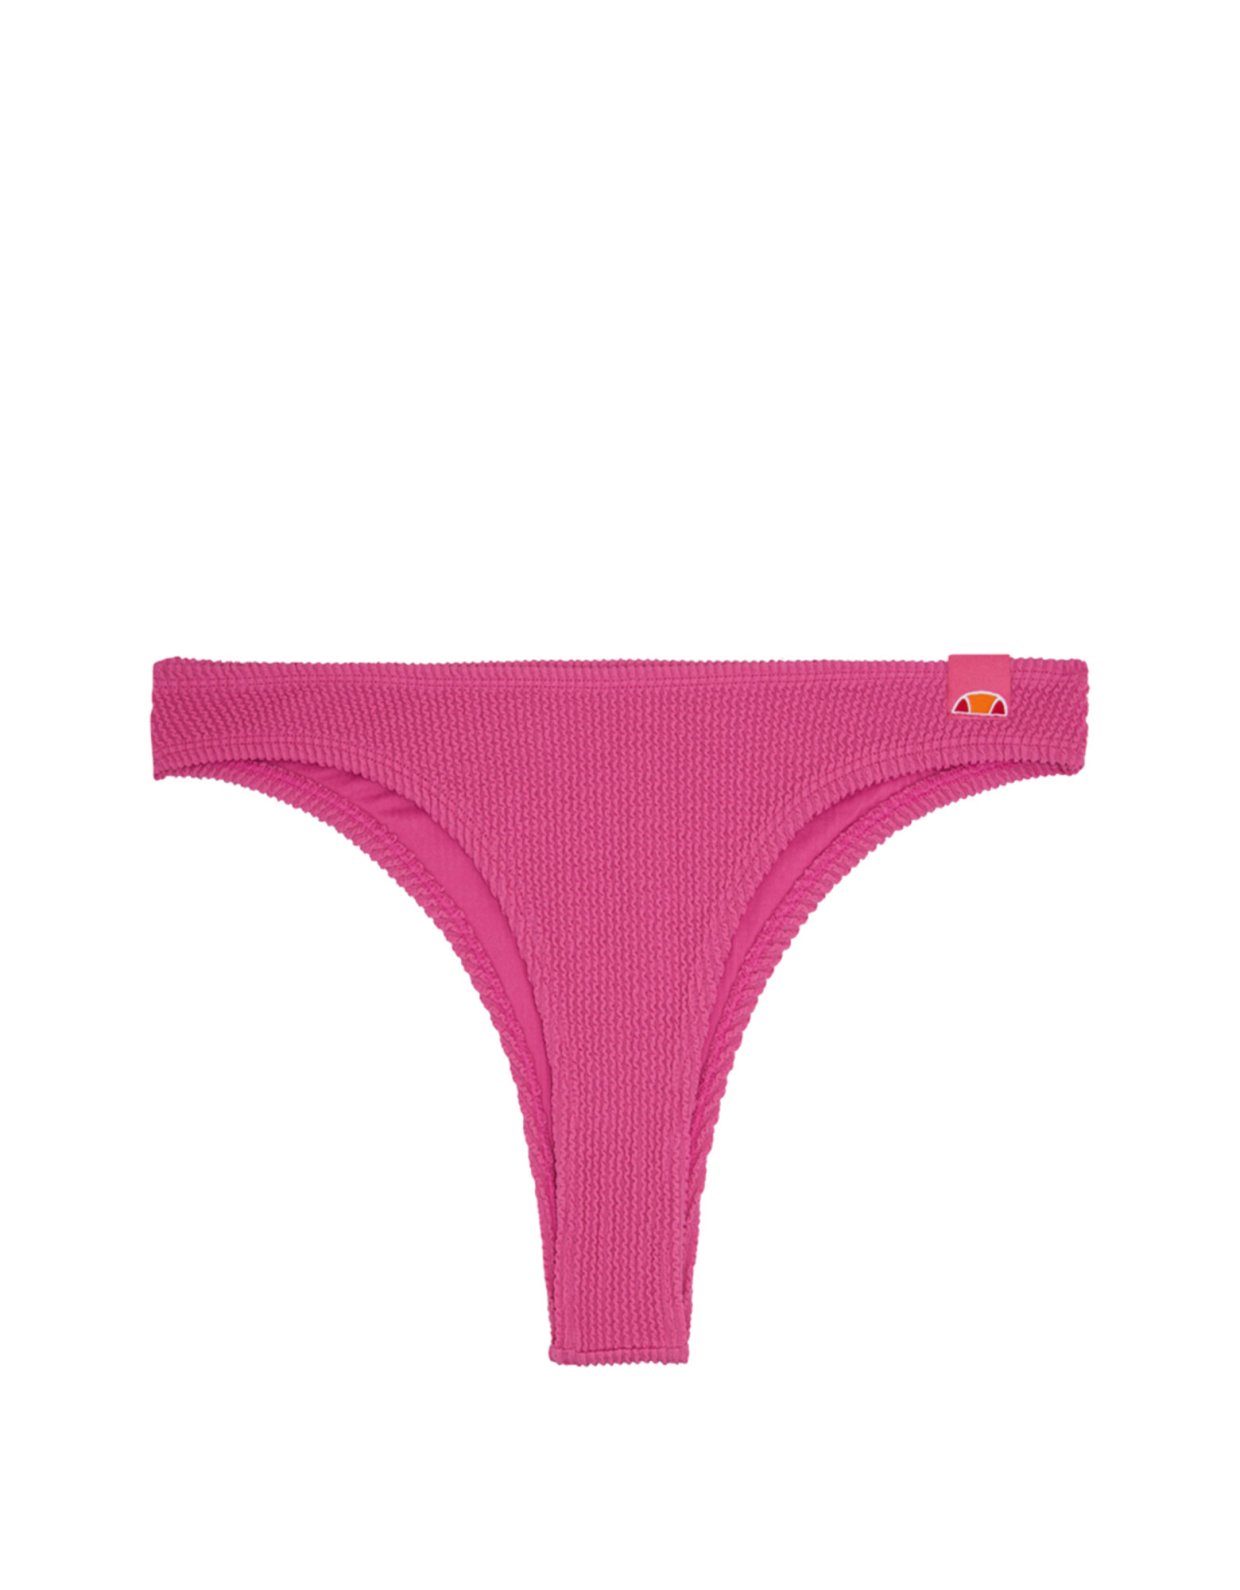 Ellesse Glare bikini bottom pink